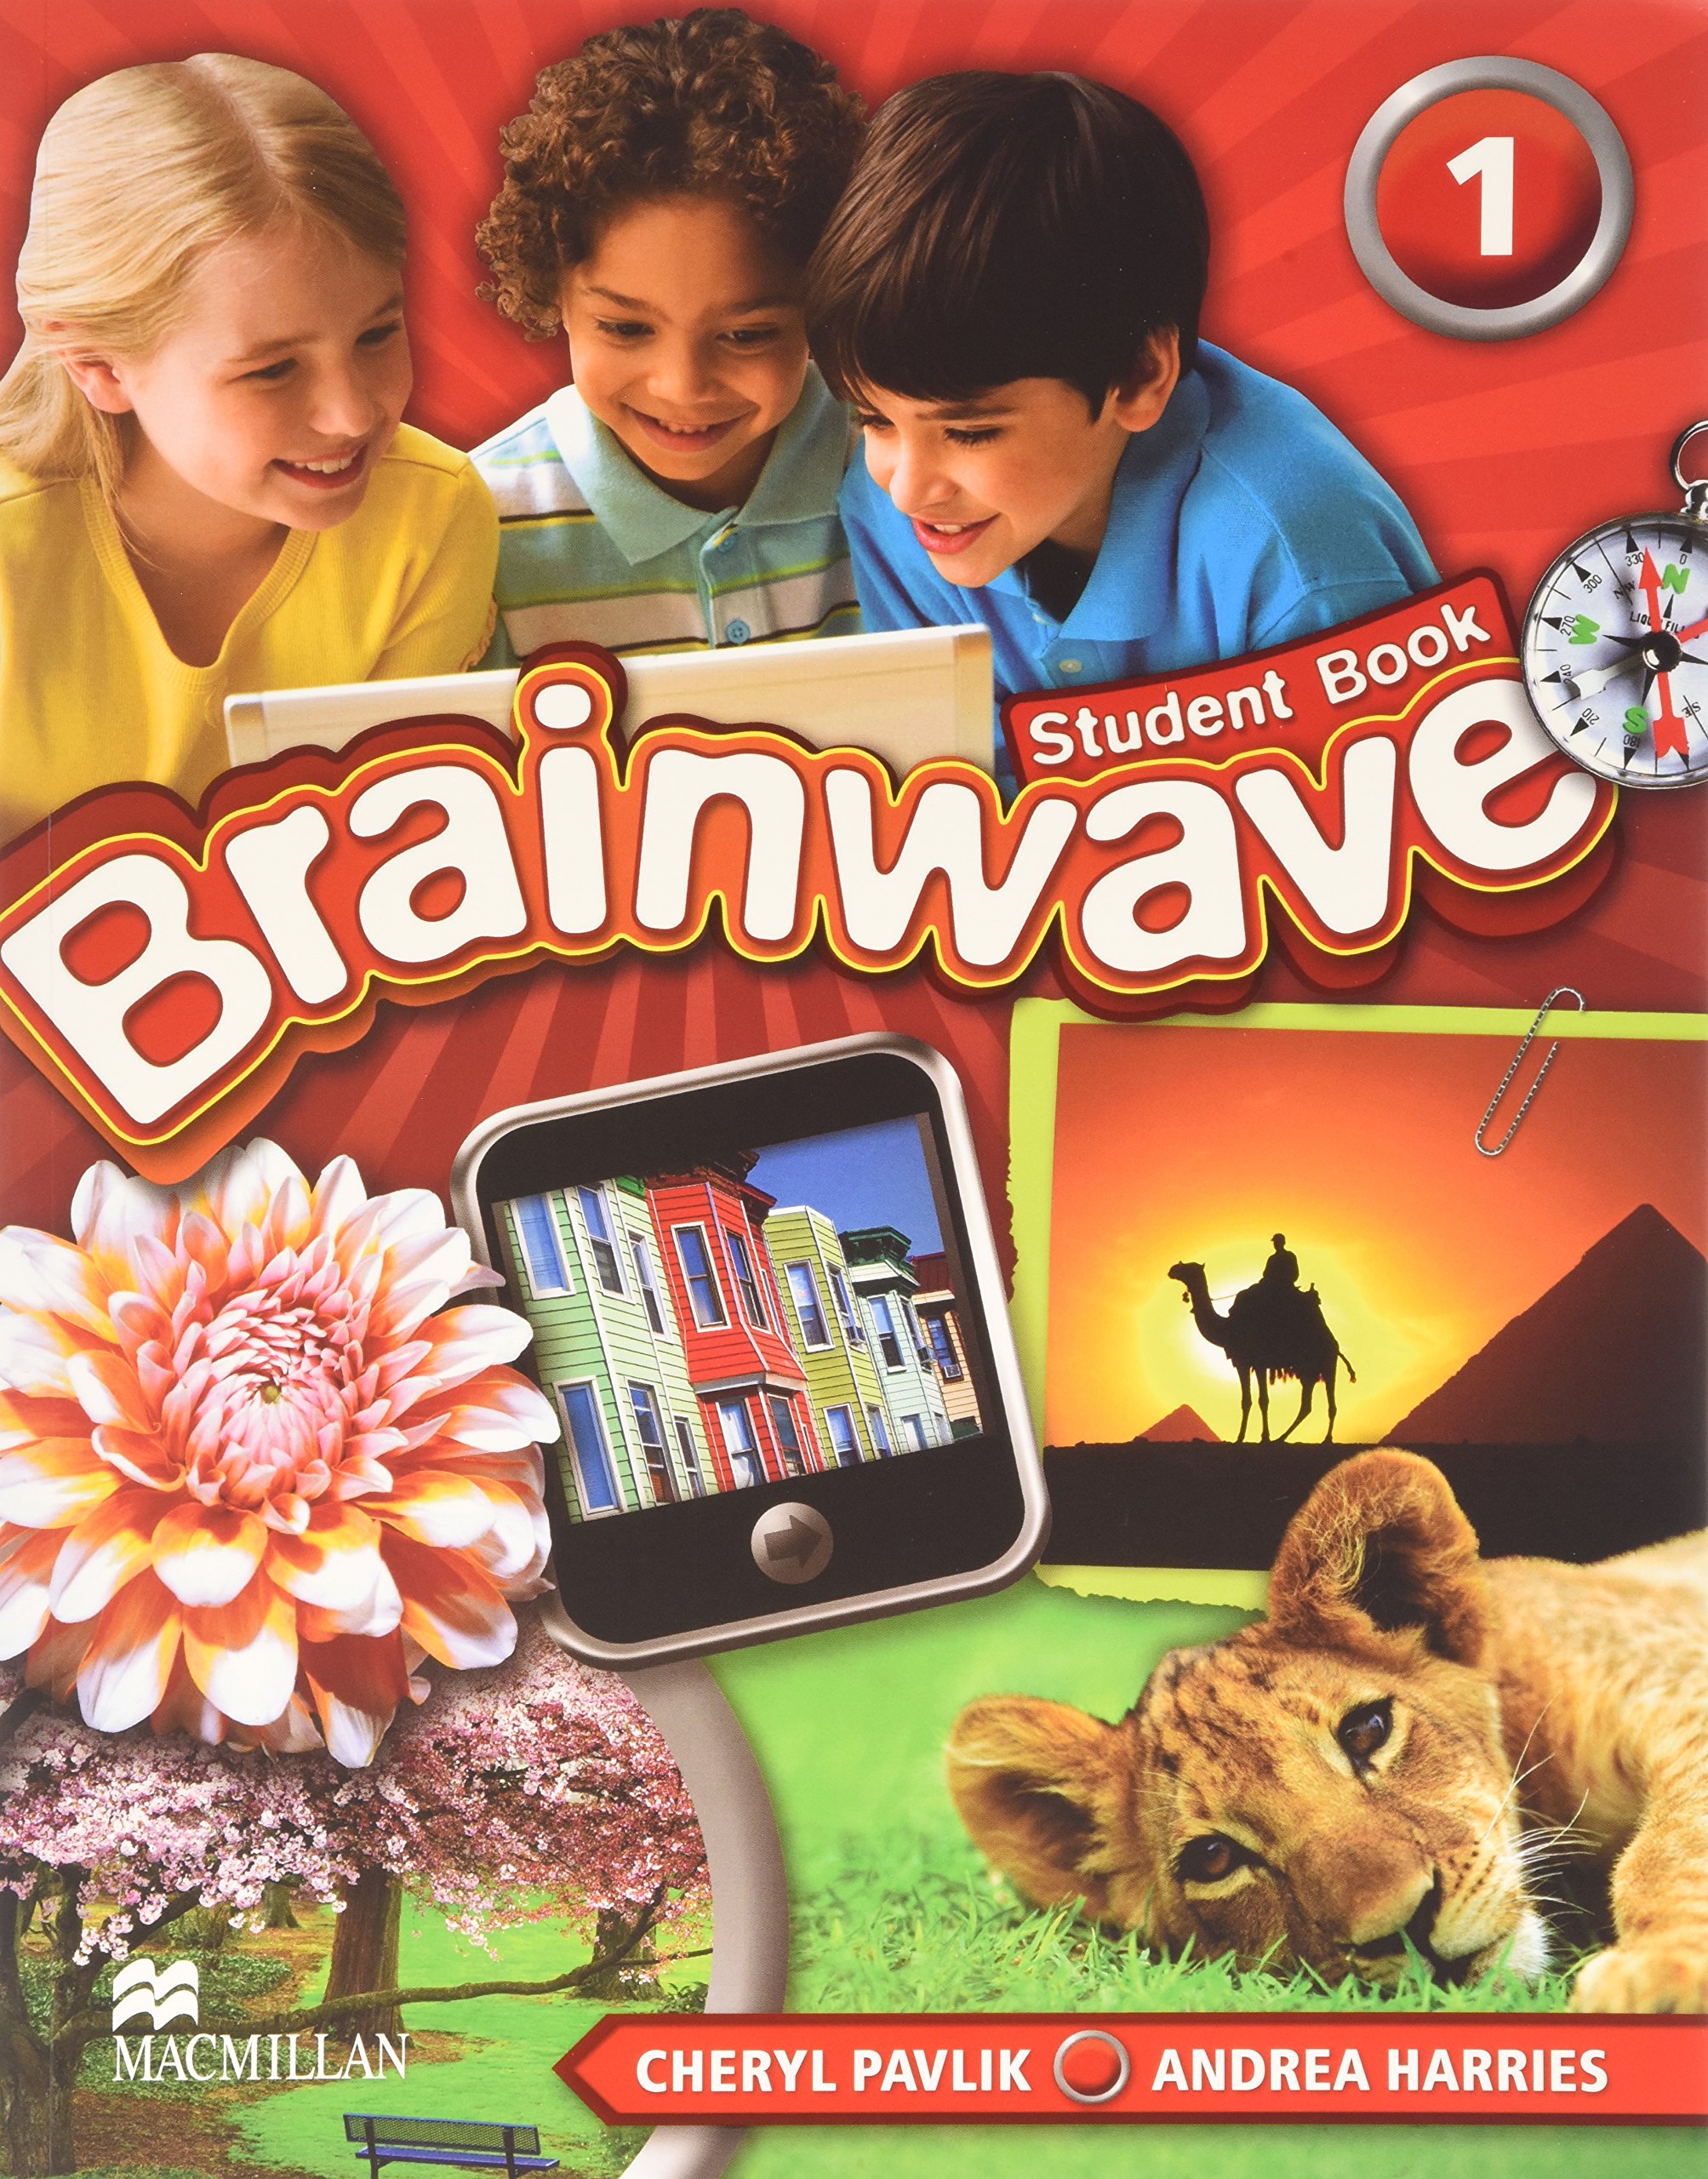 Brainwave 1 - Student Book | Cheryl Pavlik, Andrea Harries